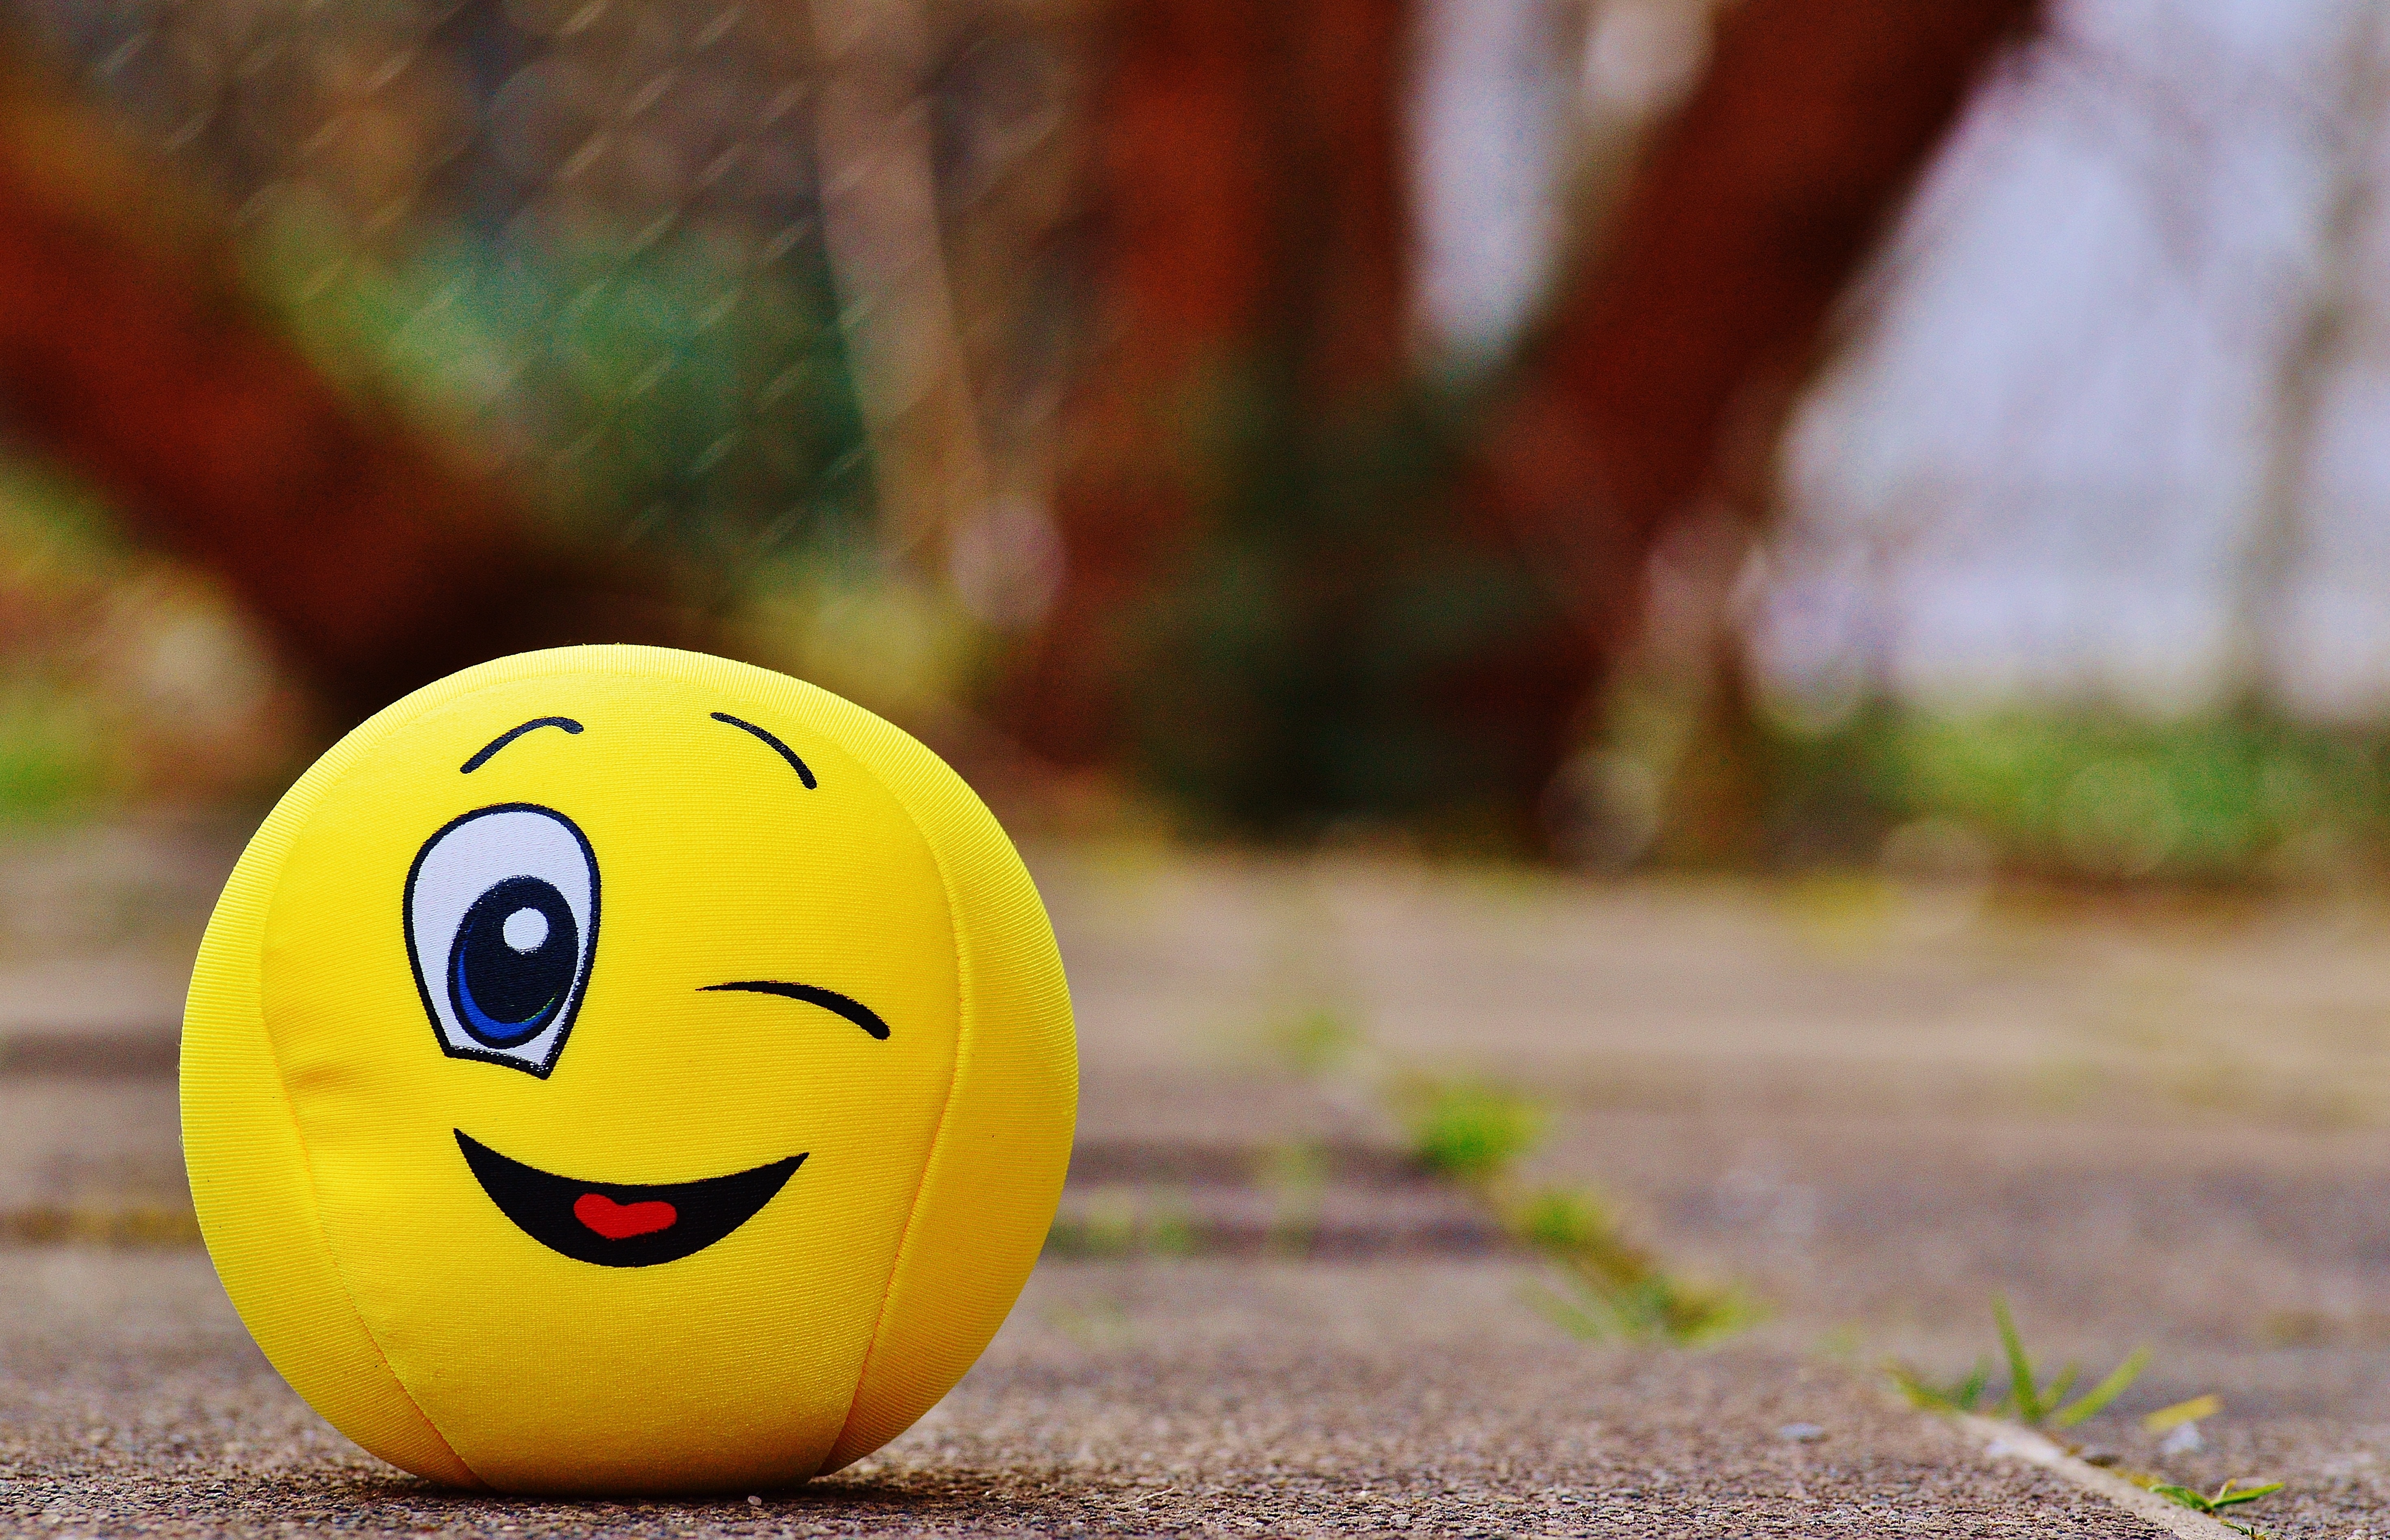 Wallpaper Winking Smiley Ball Plush Toy On Concrete